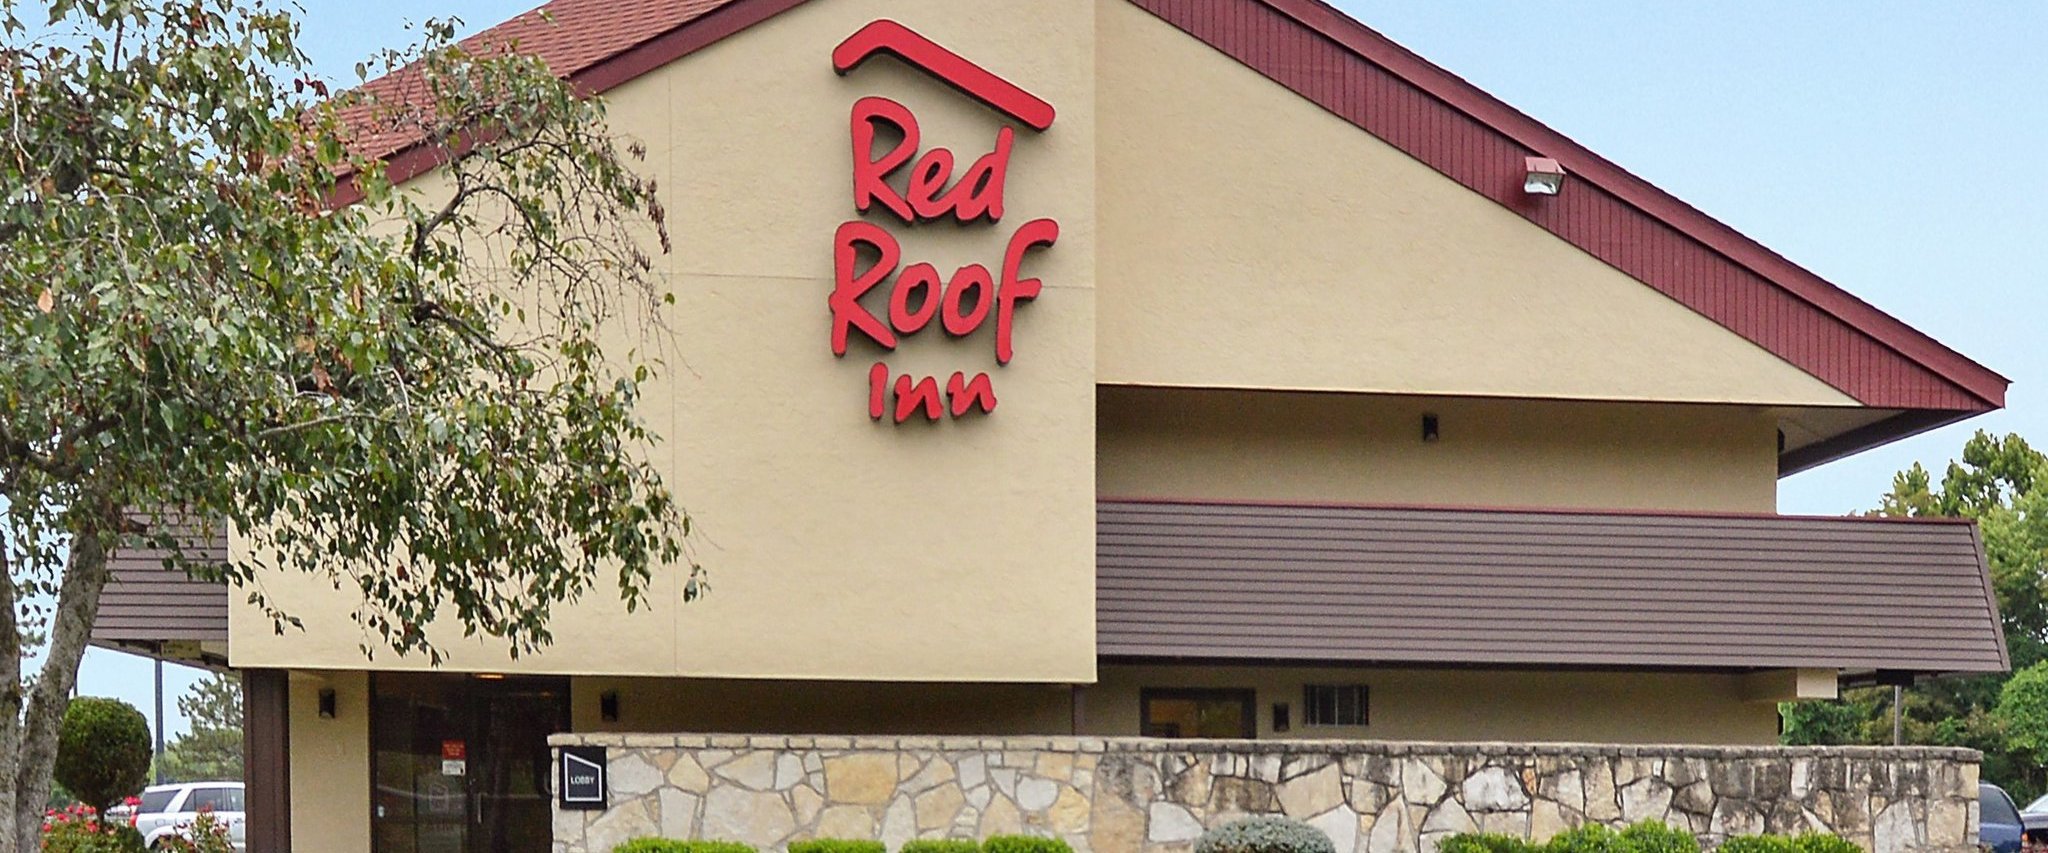 Photo of Red Roof Inn Huntington, Huntington, WV